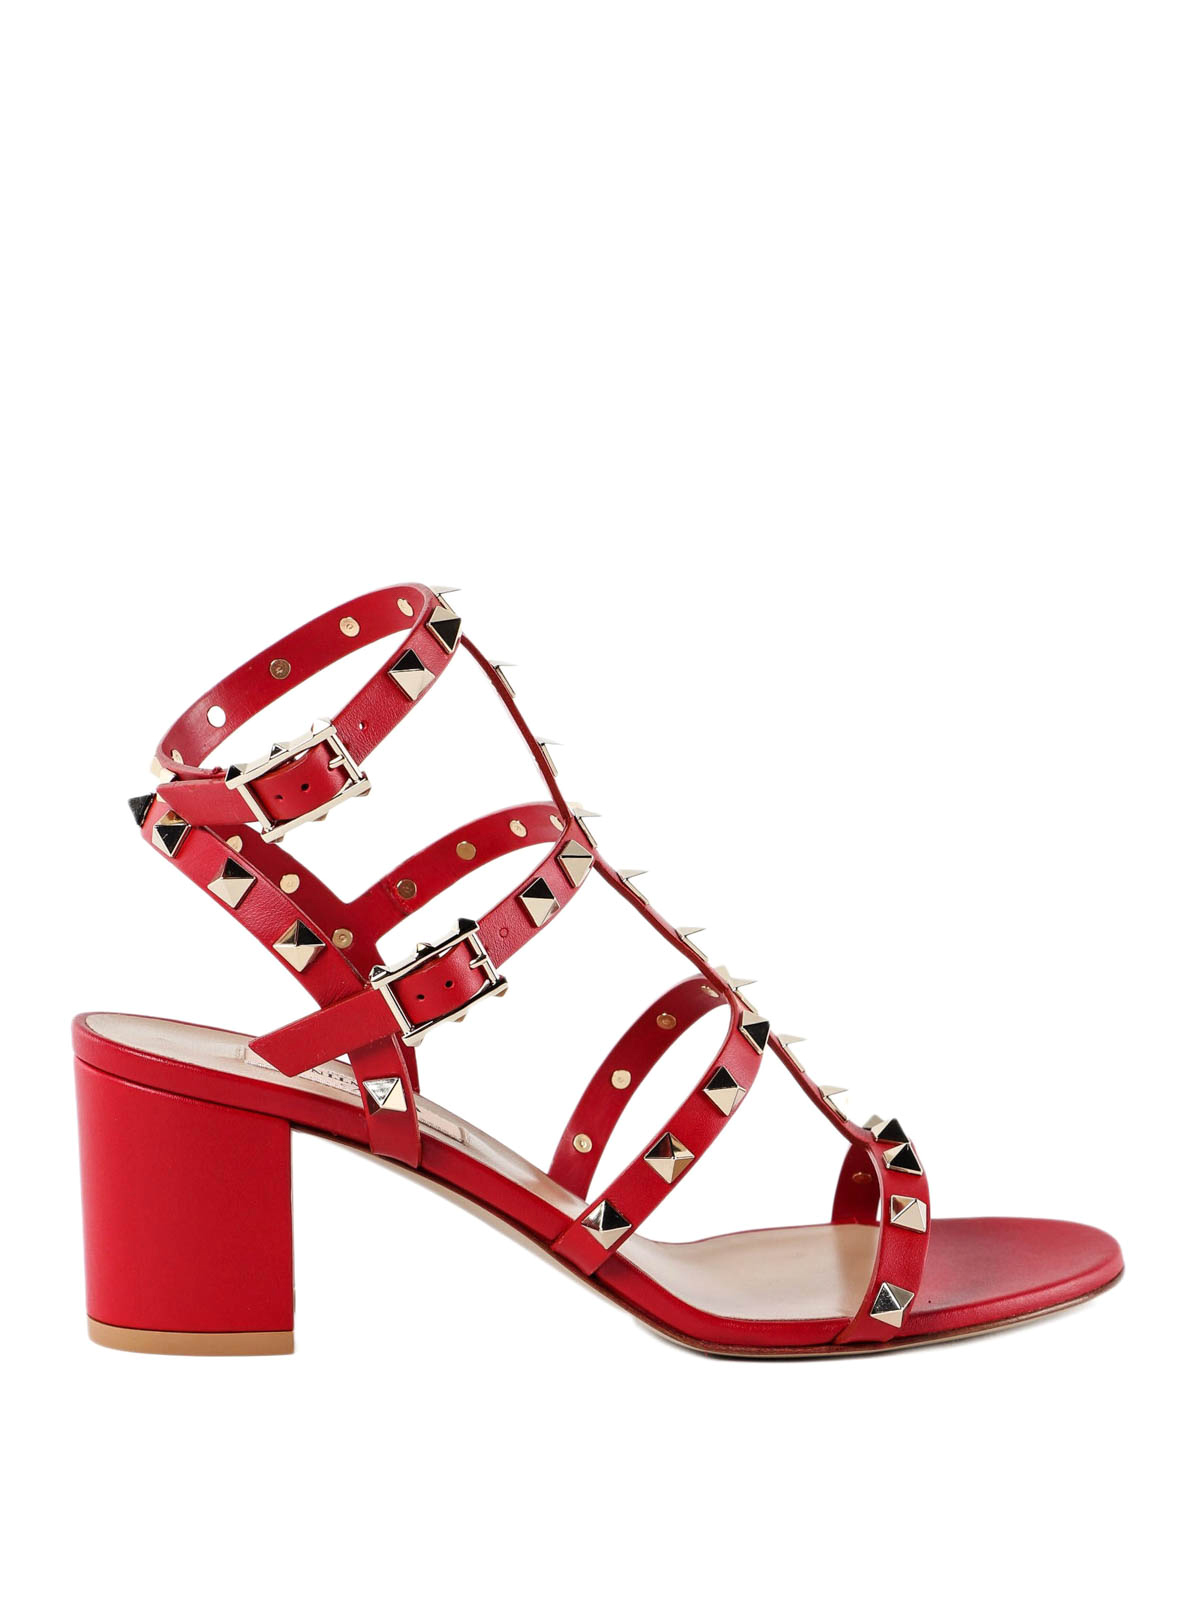 Sandals Valentino Garavani - Rockstud red leather heeled sandals ...